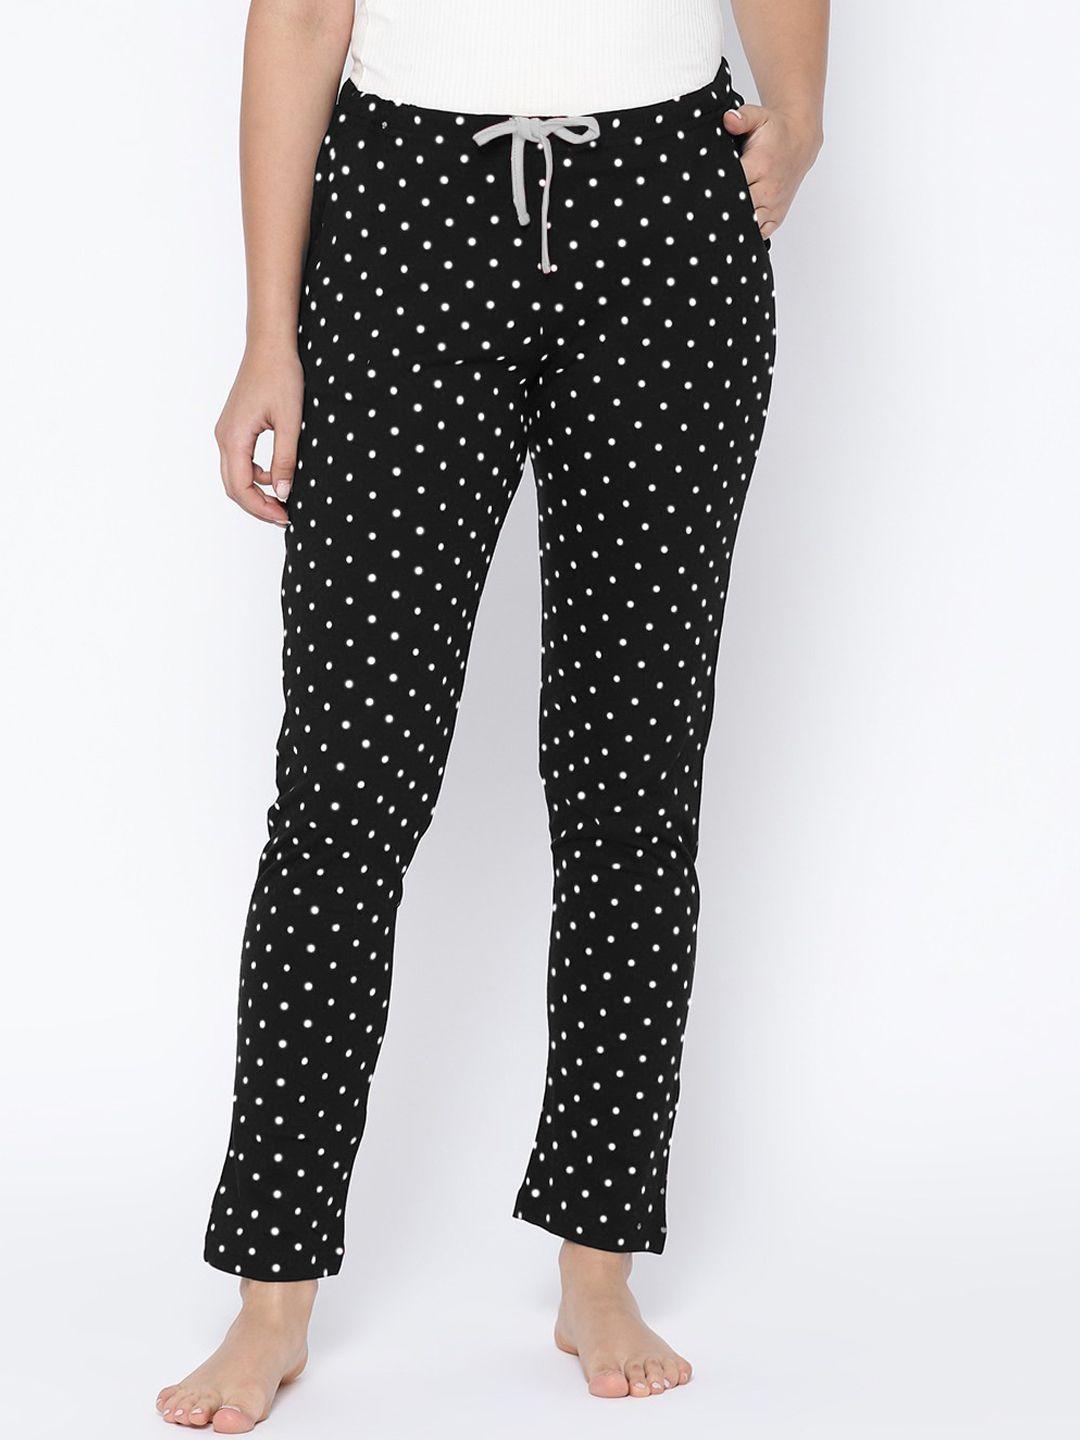 kanvin women black polka dot printed lounge pants